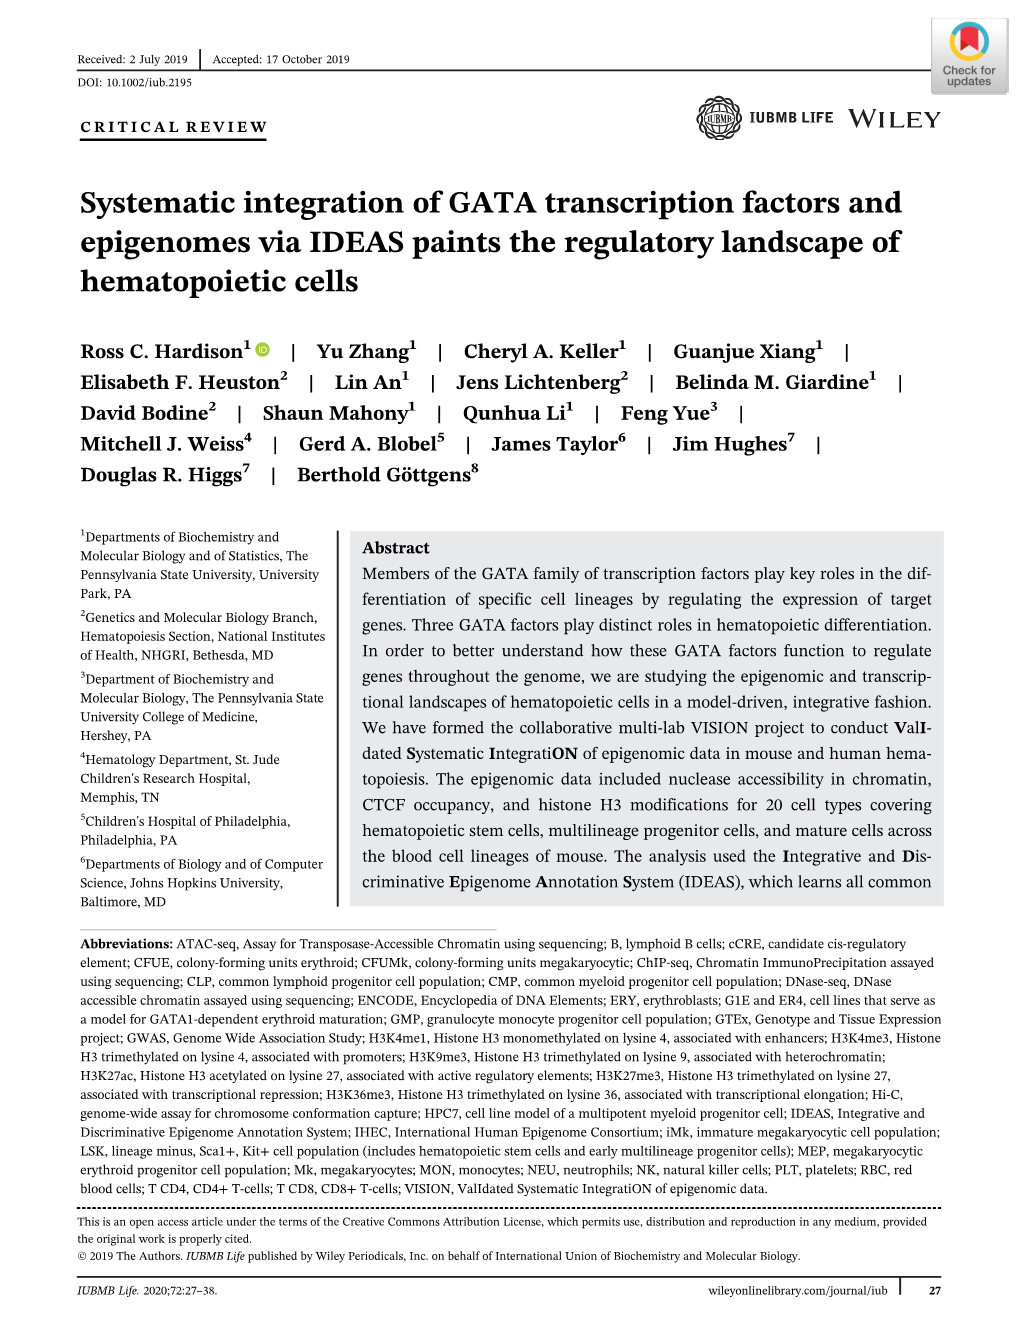 Systematic Integration of GATA Transcription Factors and Epigenomes Via IDEAS Paints the Regulatory Landscape of Hematopoietic Cells